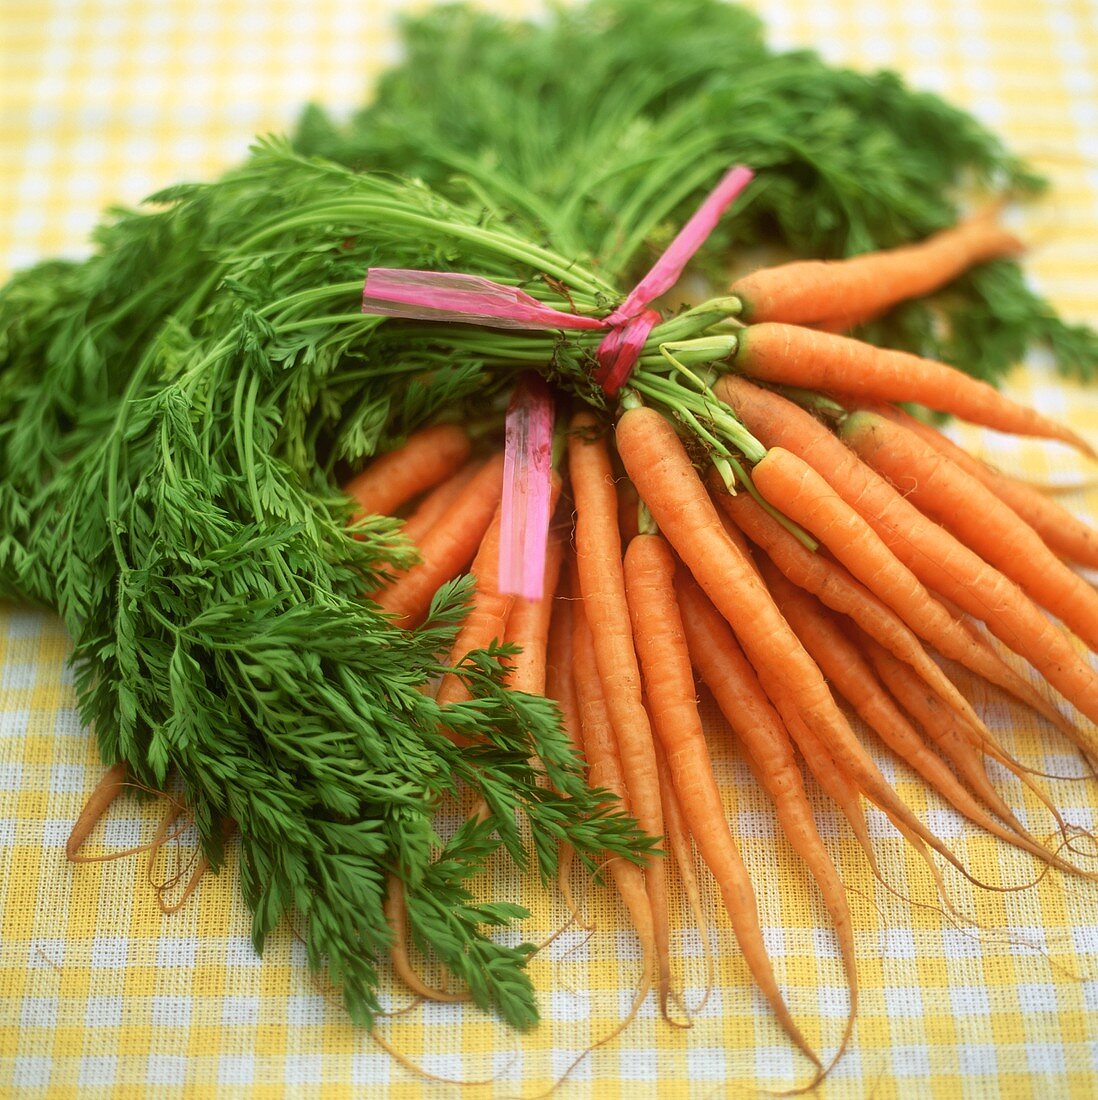 Several Fresh Whole Carrots